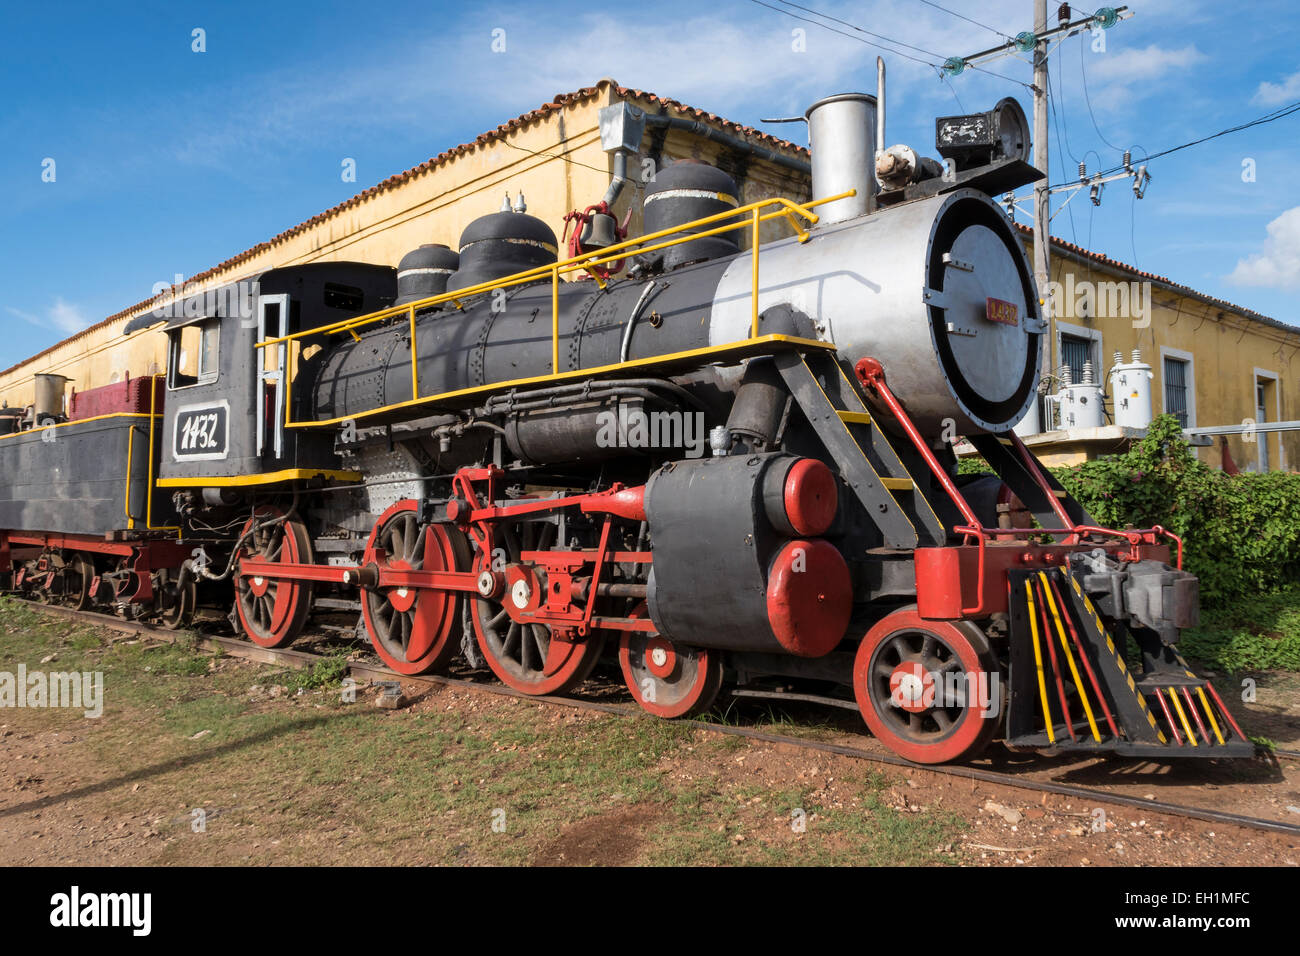 Steam Locomotive 1432 4-6-0 BLW 53798/20 OOU now at the Trinidad railway museum, Cuba. Stock Photo